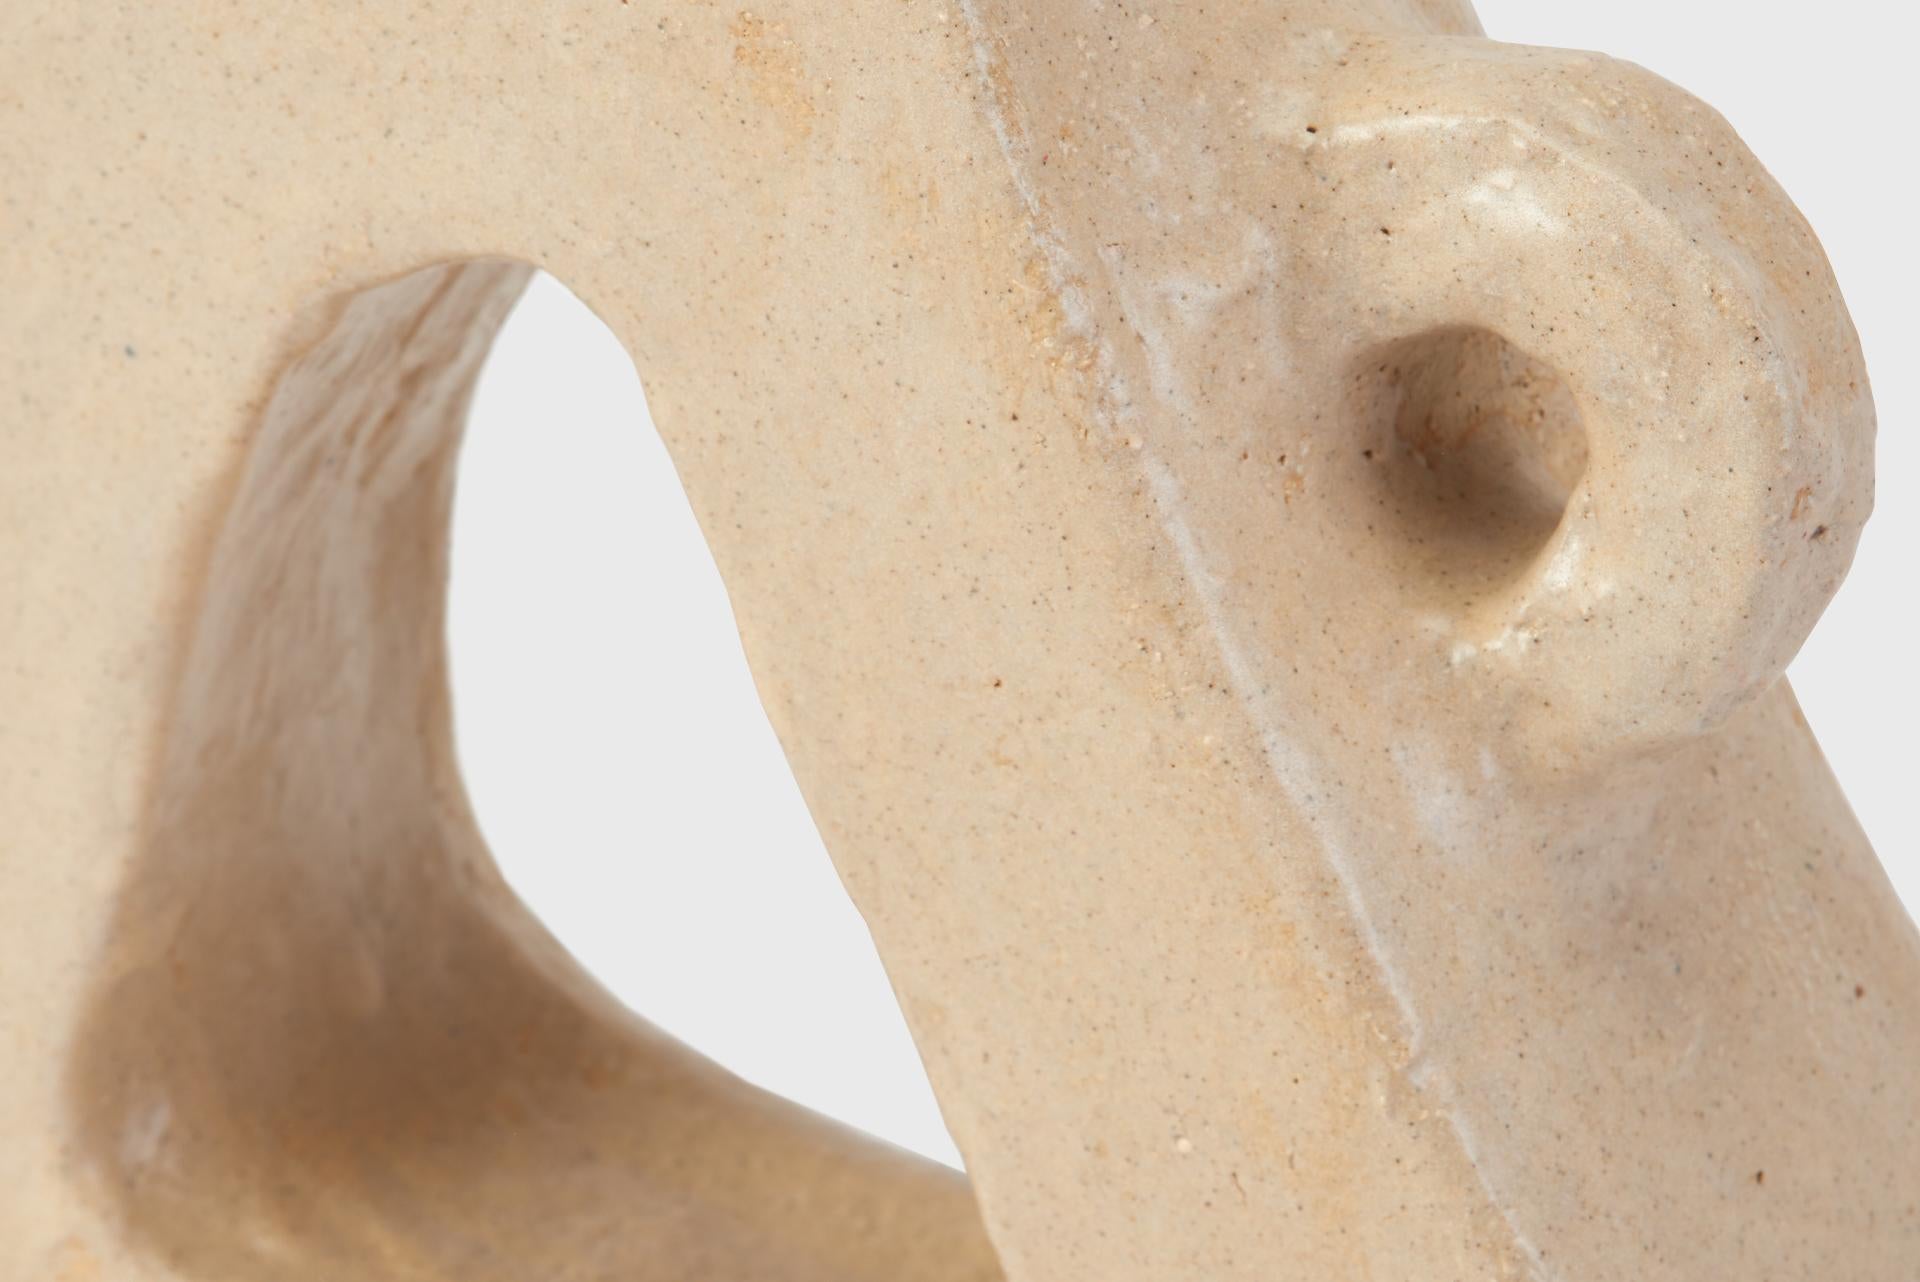 Vase model “Tatu”
Manufactured by Willem Van Hooff.
Exclusively for SIDE.
Netherlands, 2023.
Earthenware, glazed.

Measurements
26 x 9 x 48h cm
10,2 x 3,5 x 18,9h in

Provenance
Holland, Netherlands.

Exhibitions
Casavells